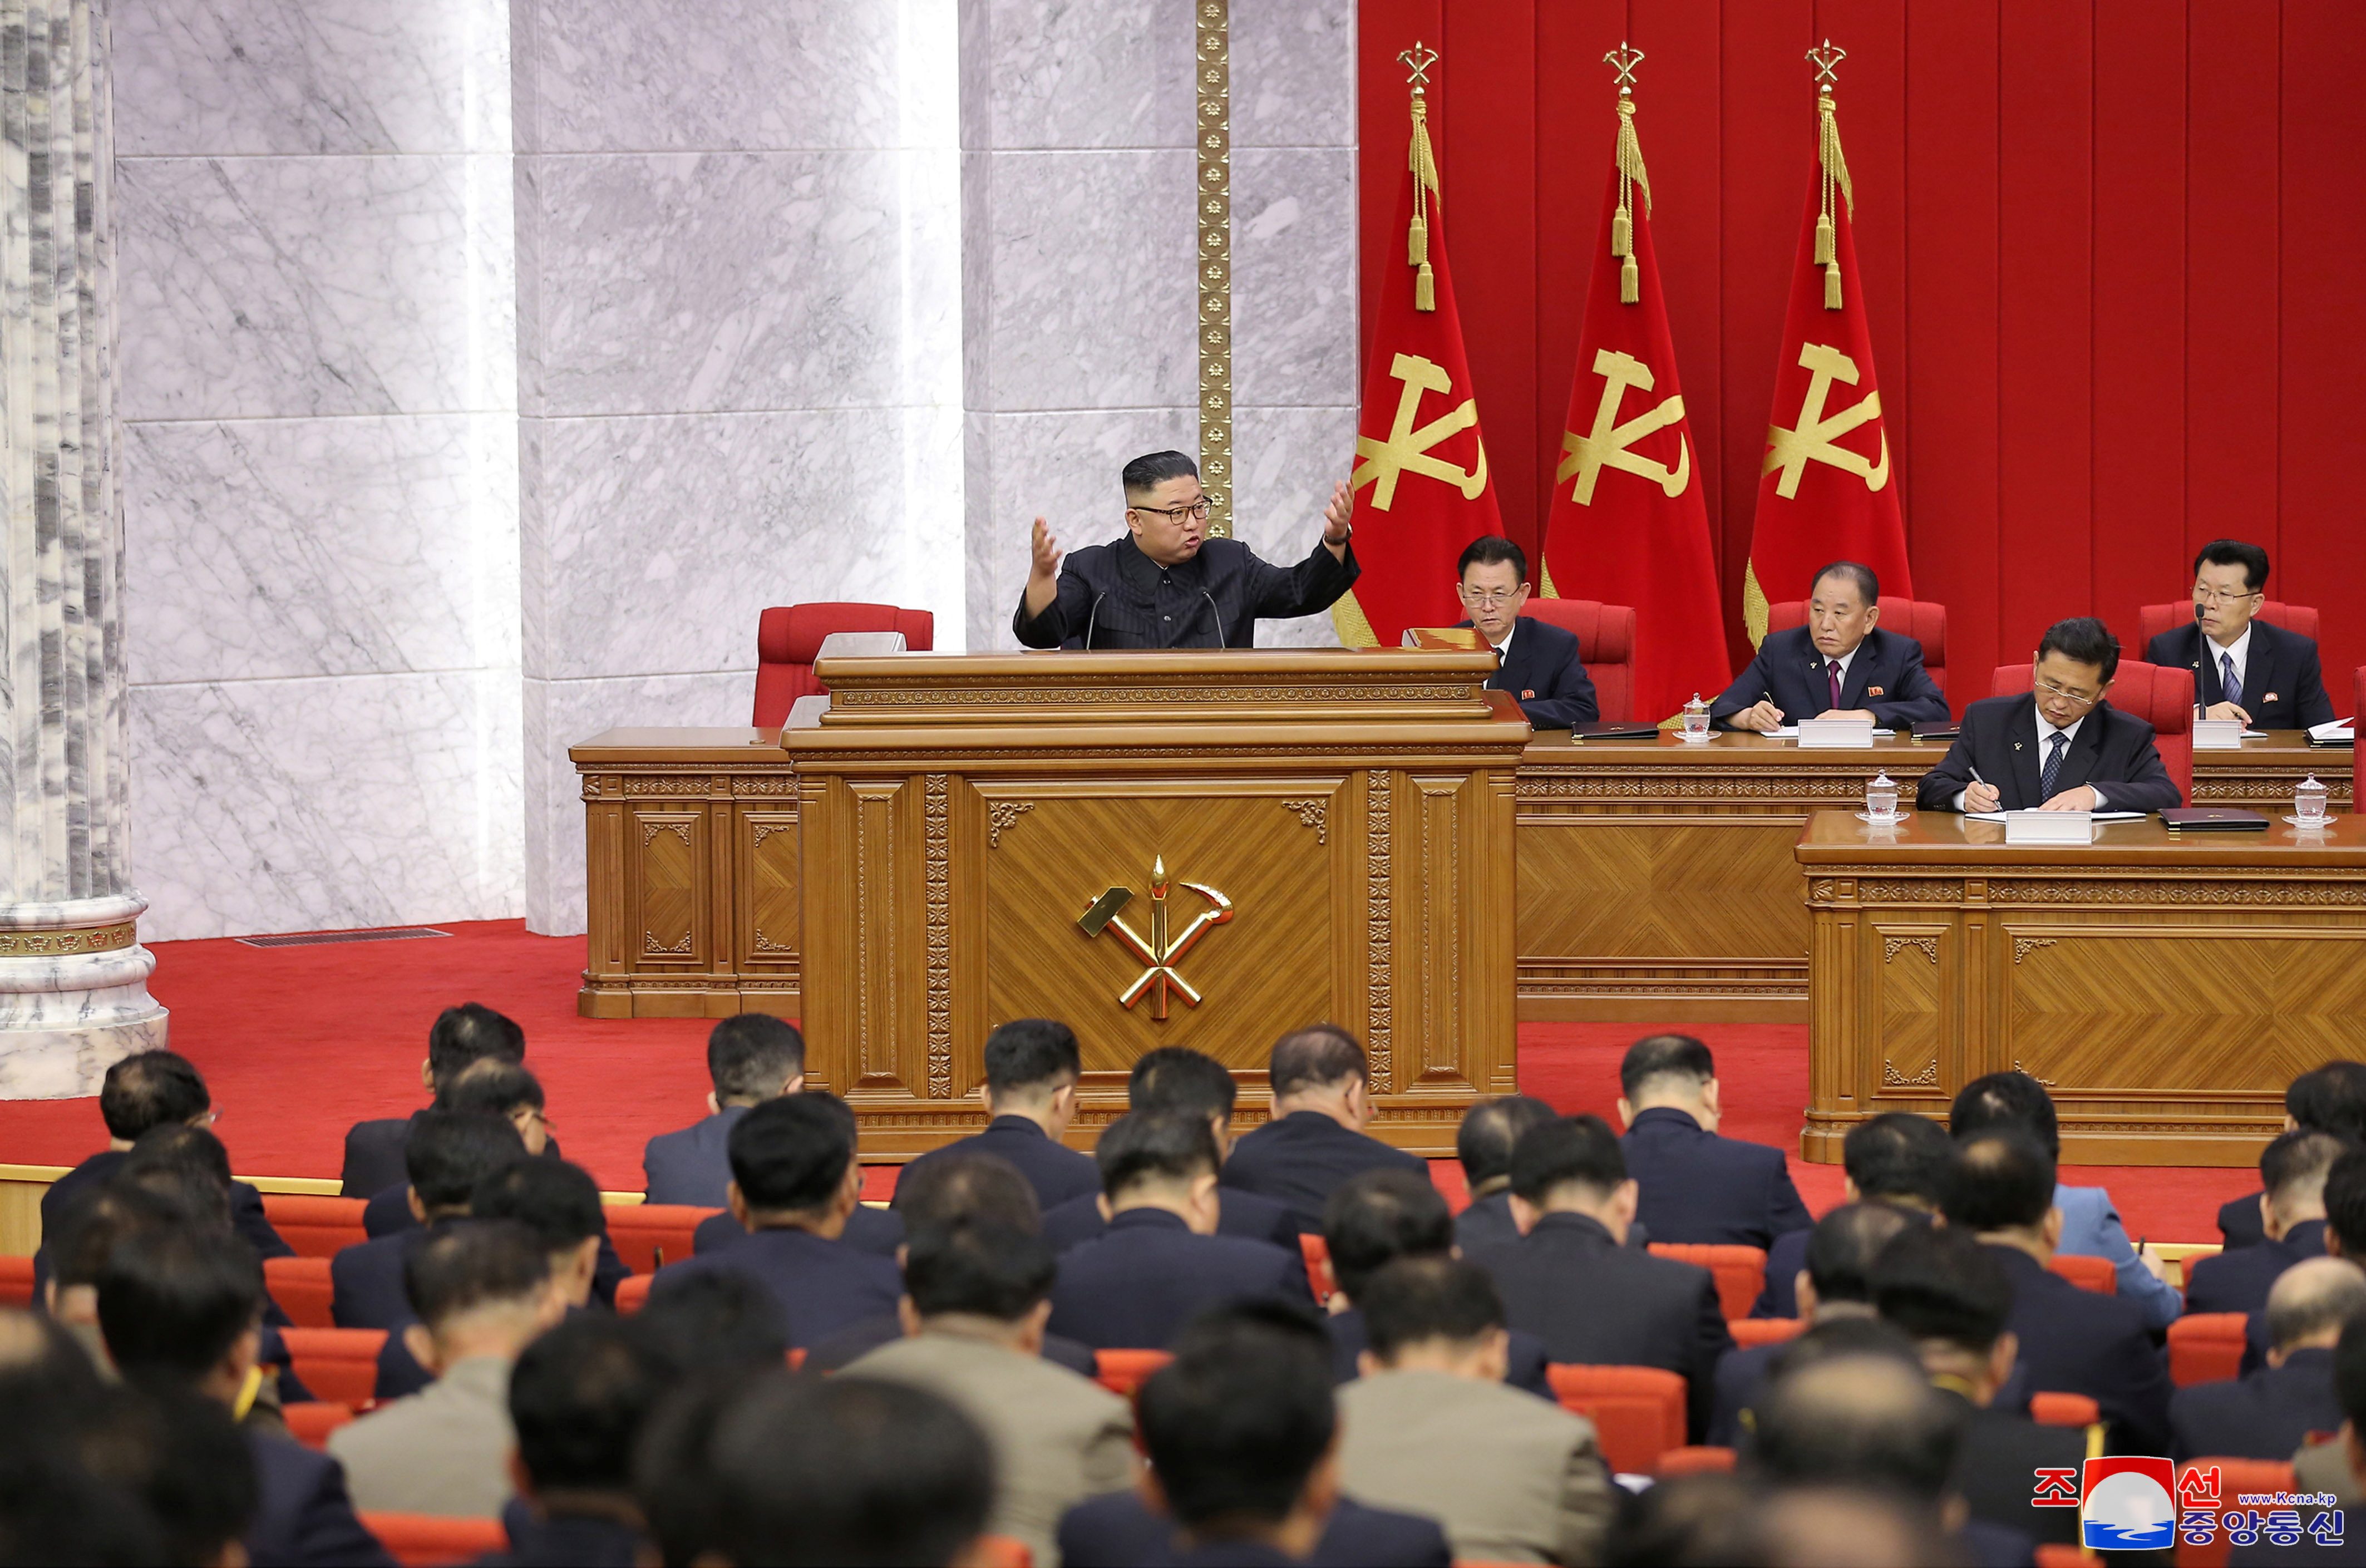 Kim’s reshuffles serve to keep North Korea elite in line as crises mount